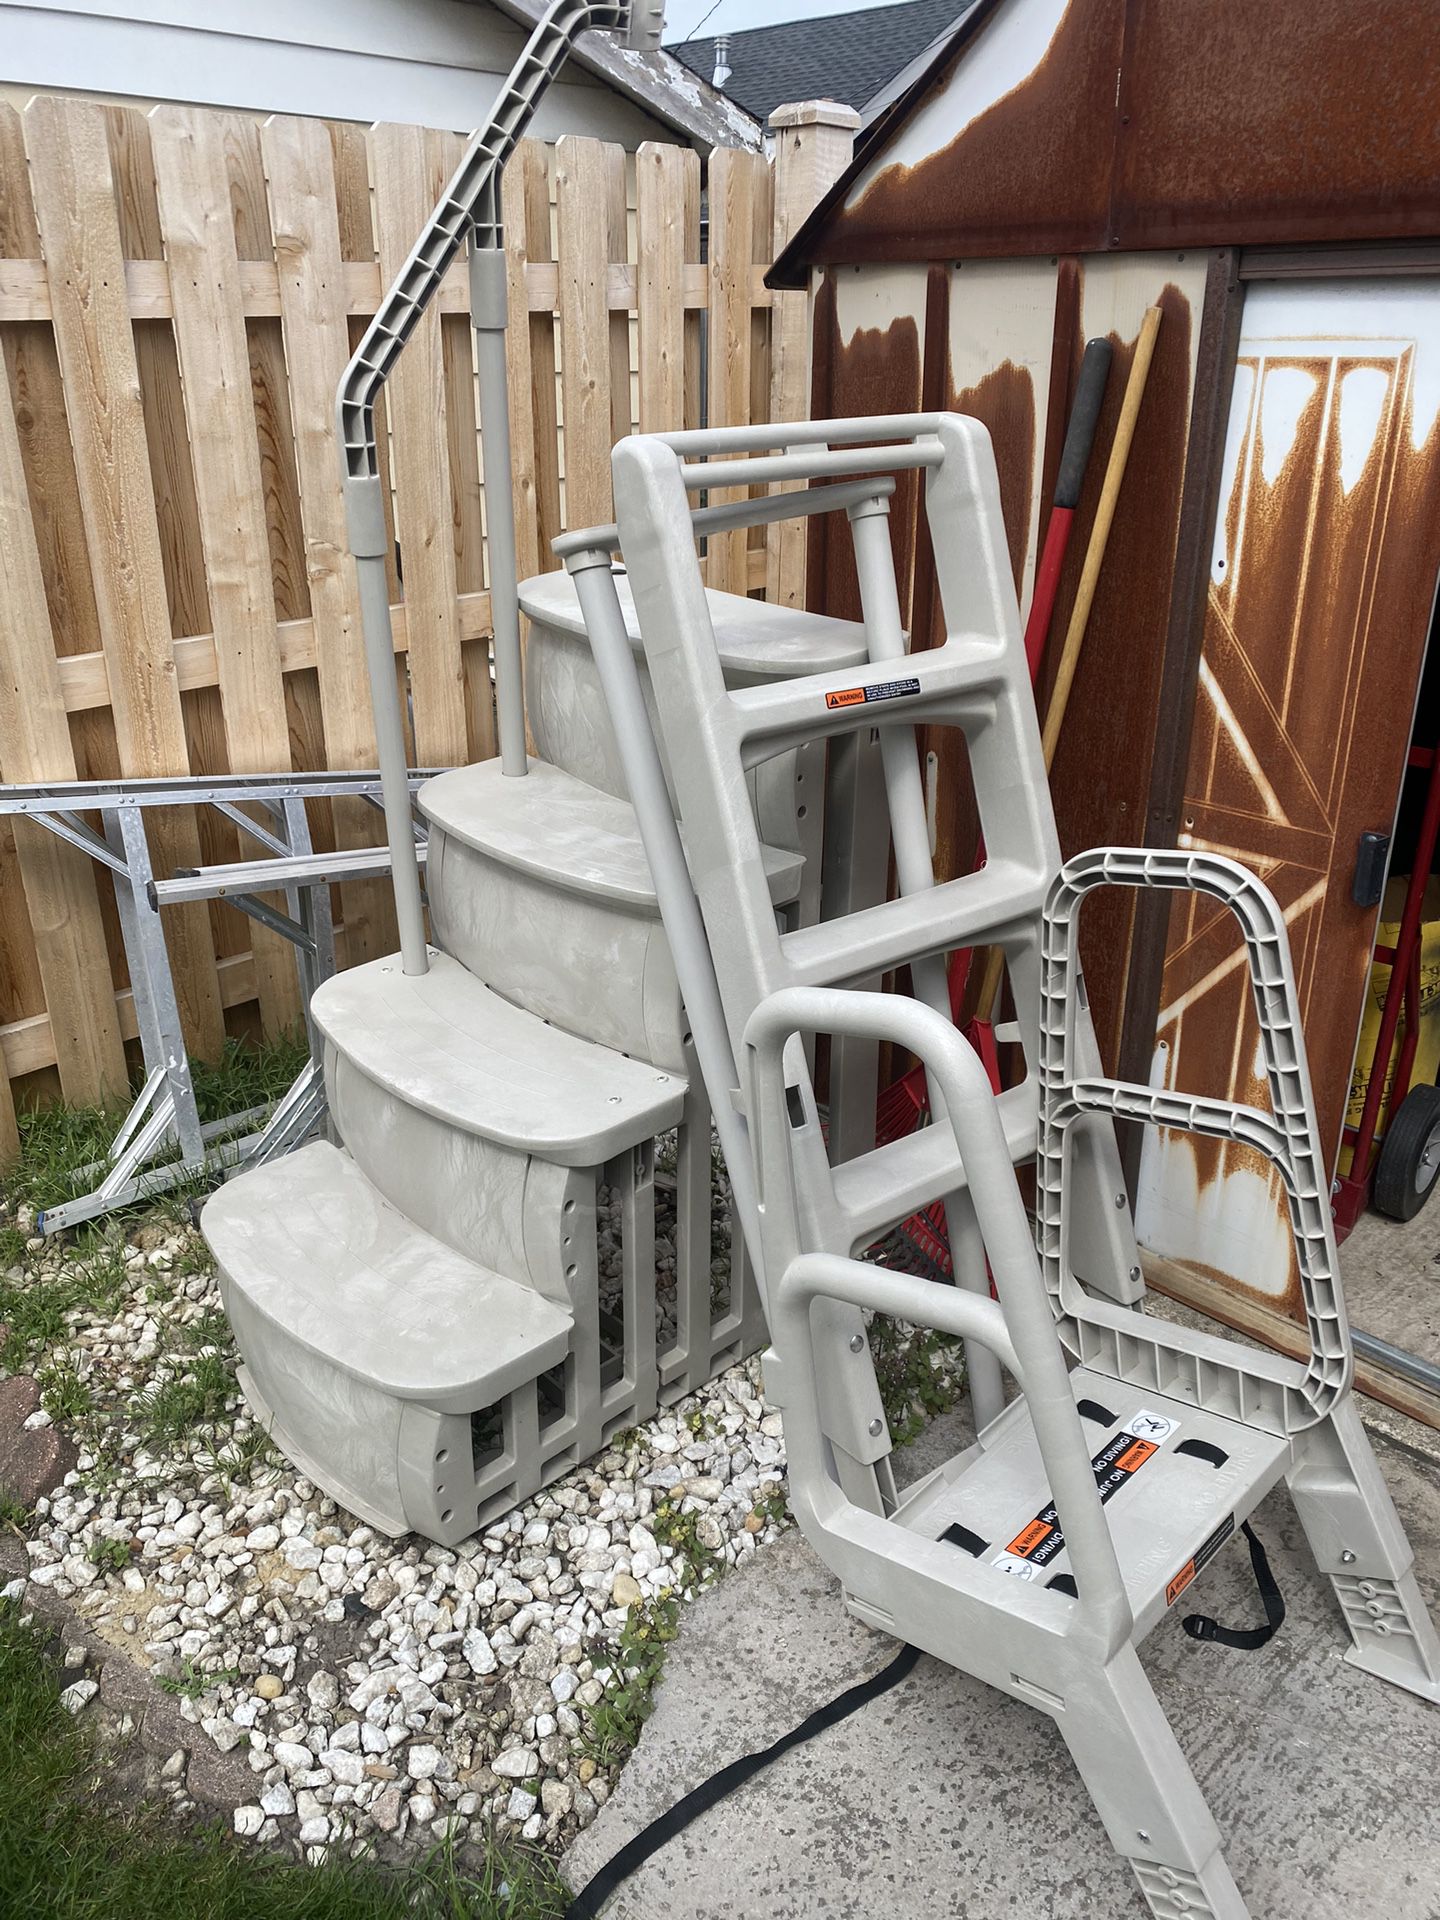 Main Access Pool Steps/Ladder